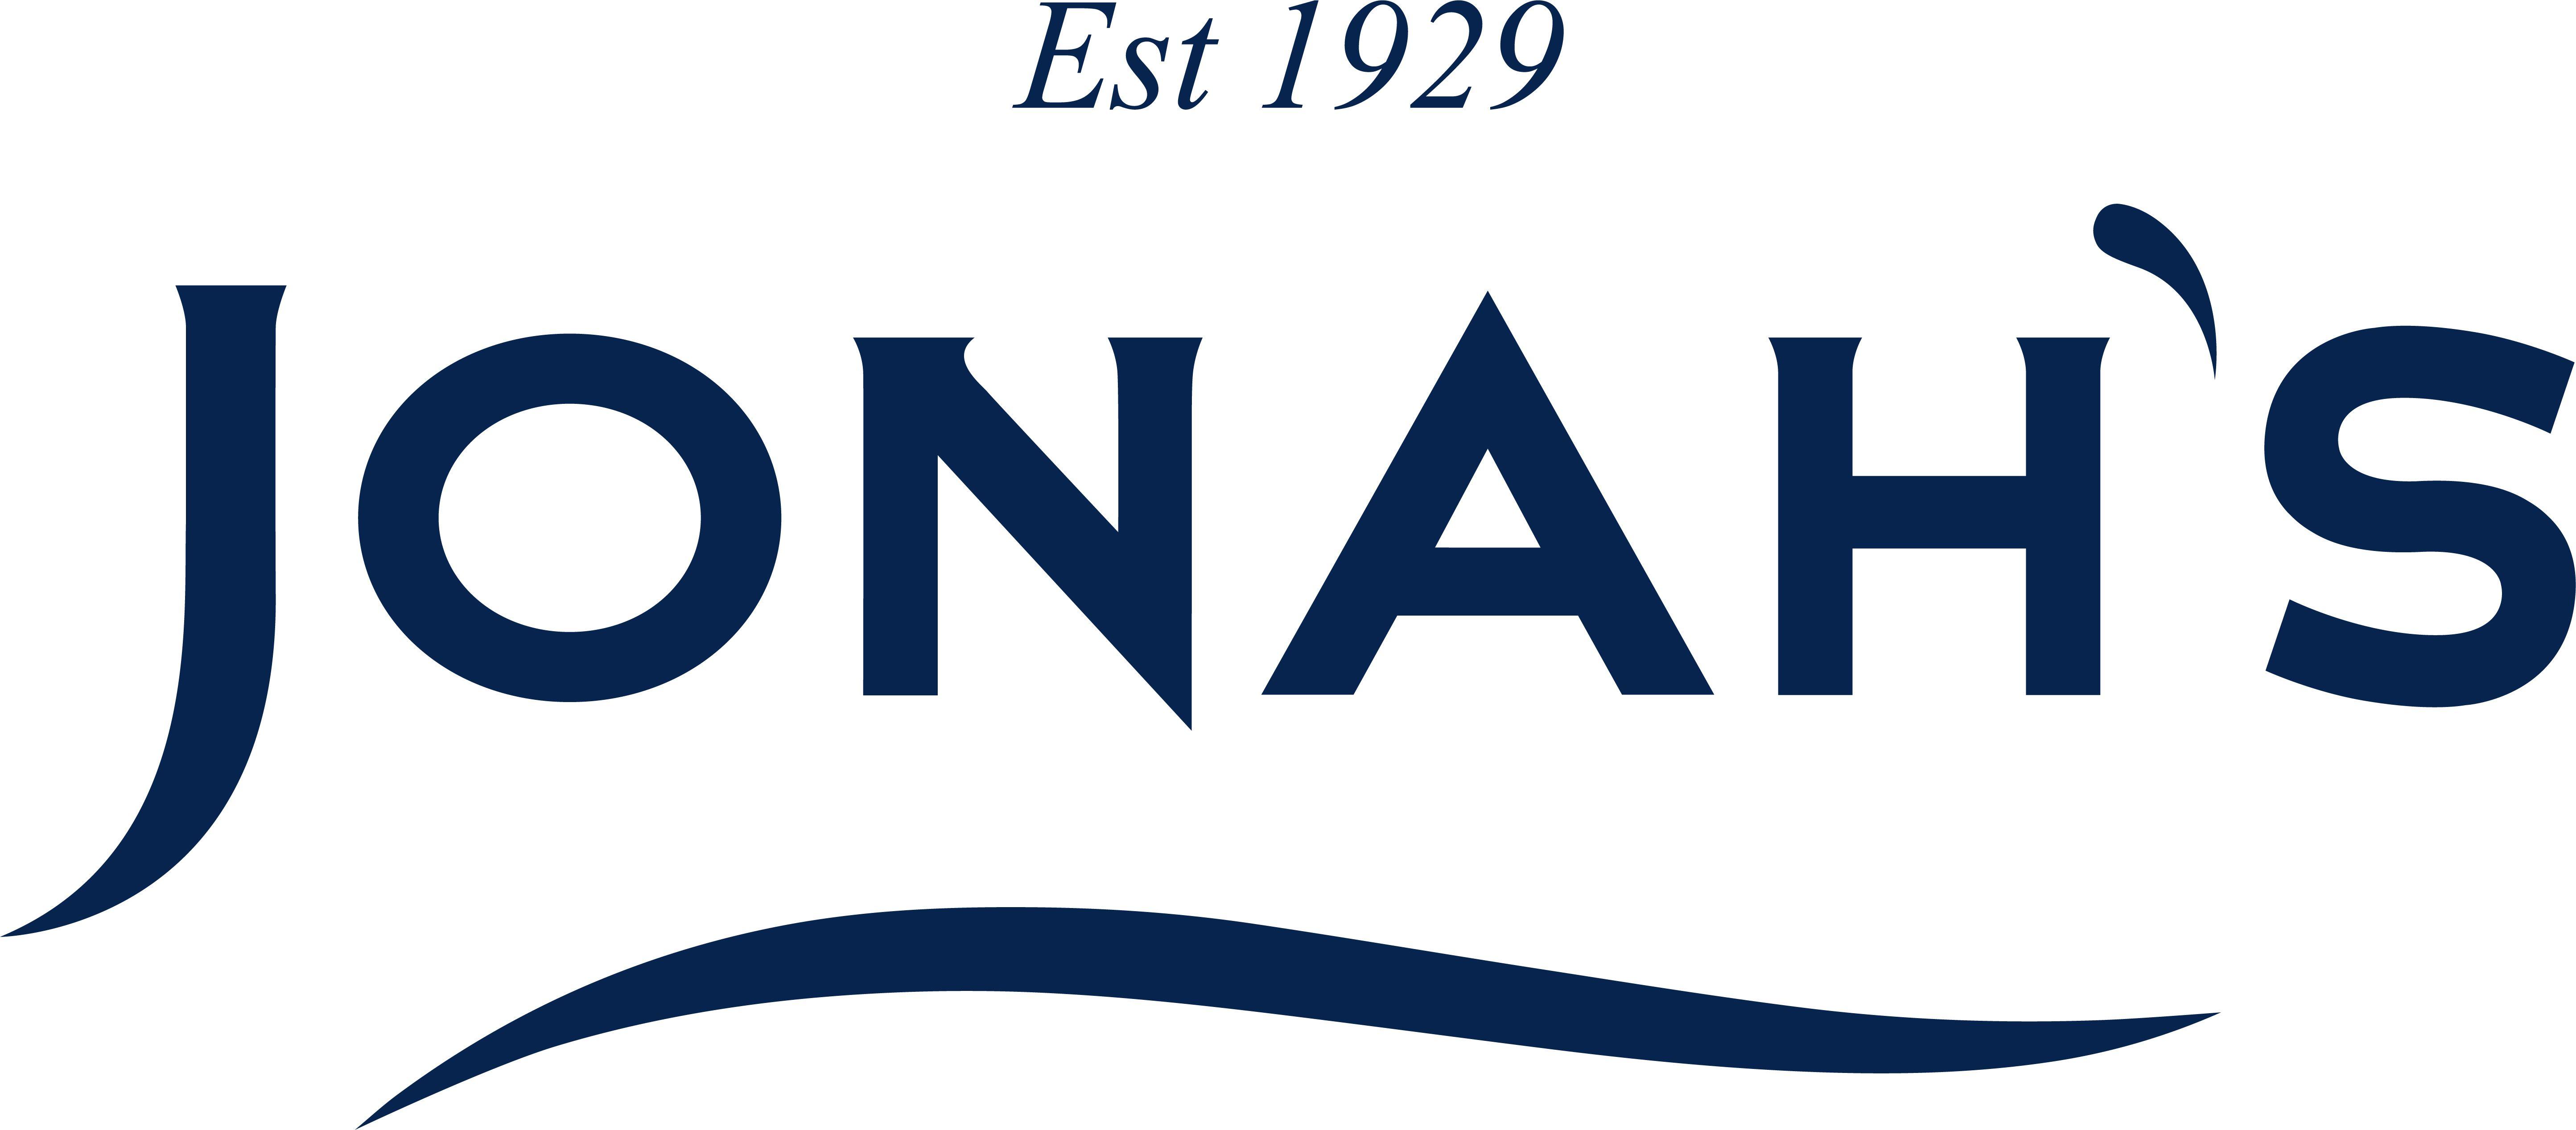 Jonah Logo - Jonah's Whale Beach. Wedding Venue Sydney